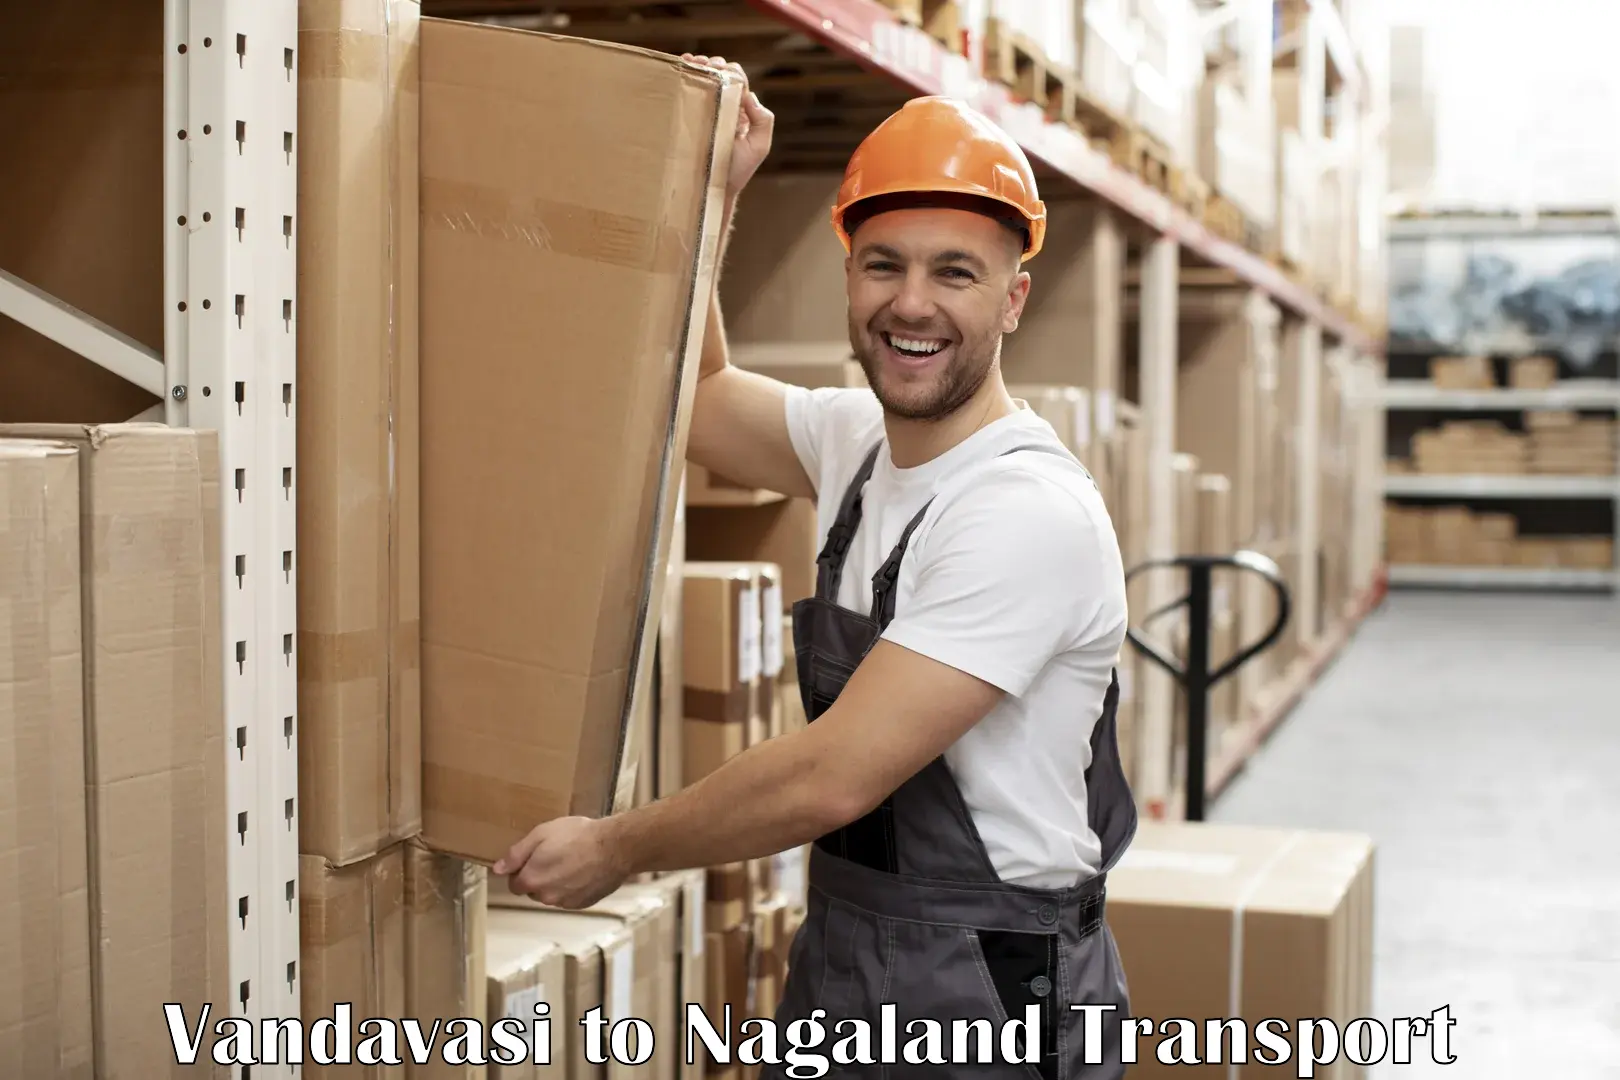 Commercial transport service Vandavasi to Nagaland